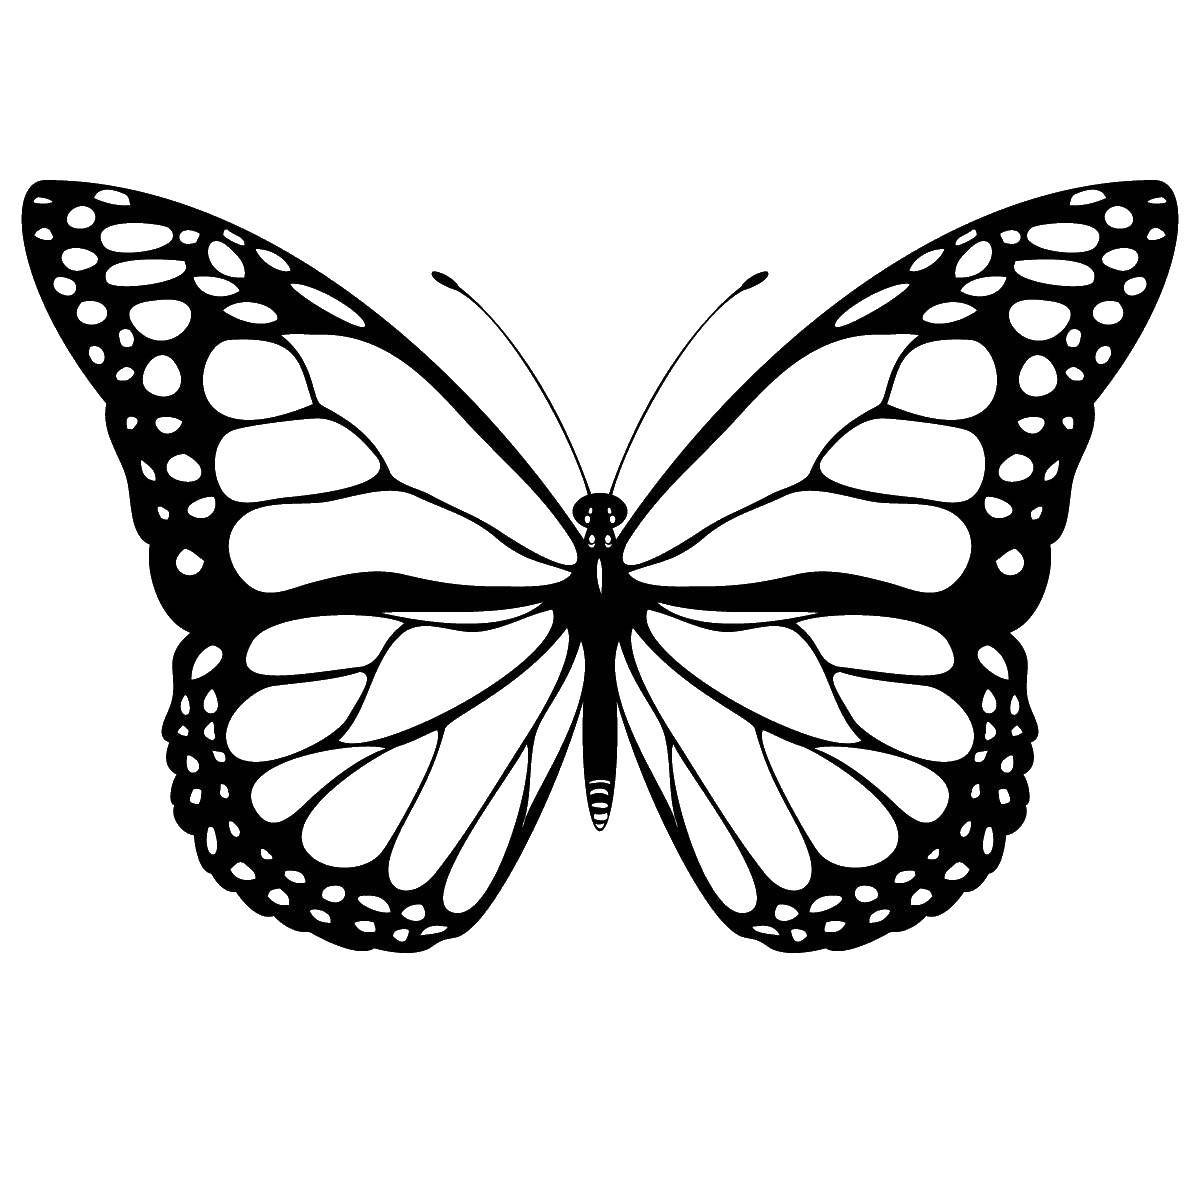 Название: Раскраска Бабочка. Категория: Бабочка. Теги: насекомые, бабочка, бабочки, узоры.